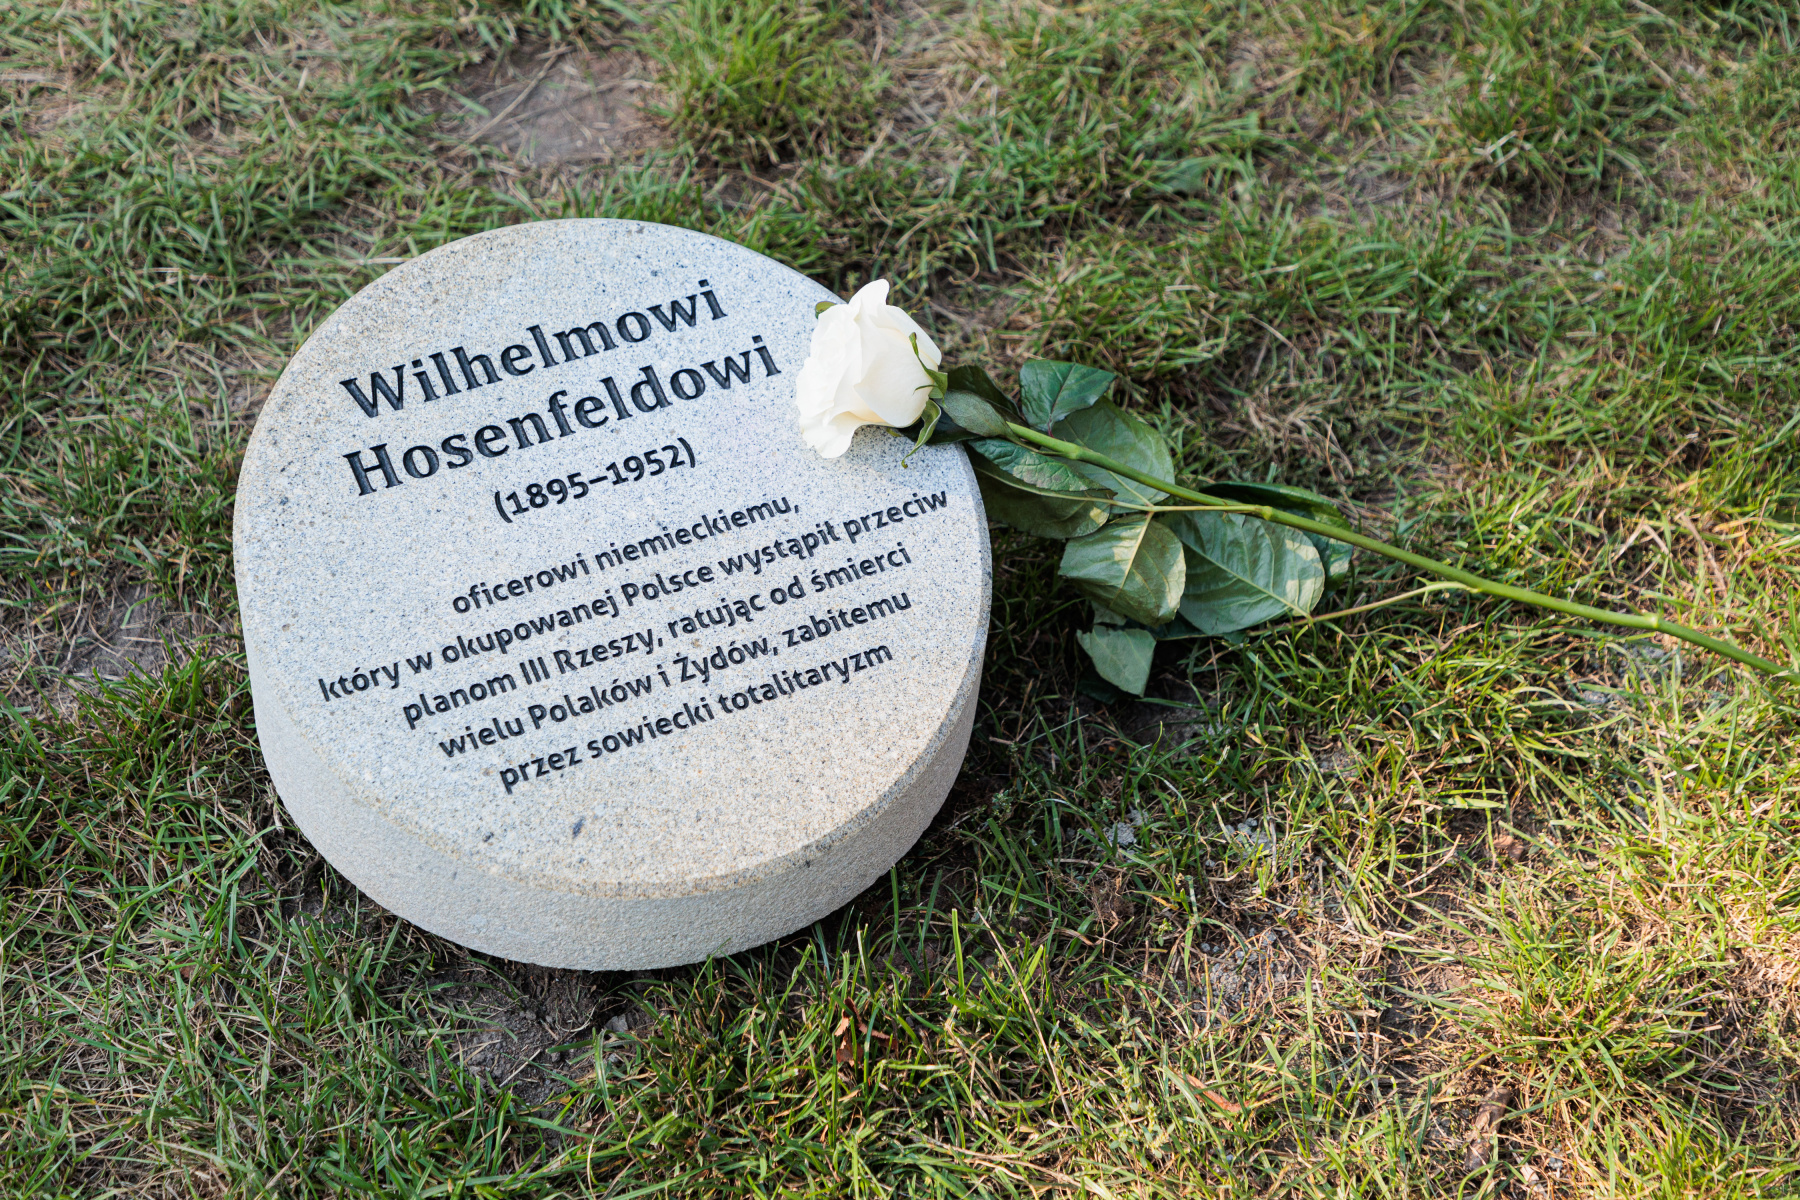 Memorial stone in the honor of Wilhellm Hosenfeld